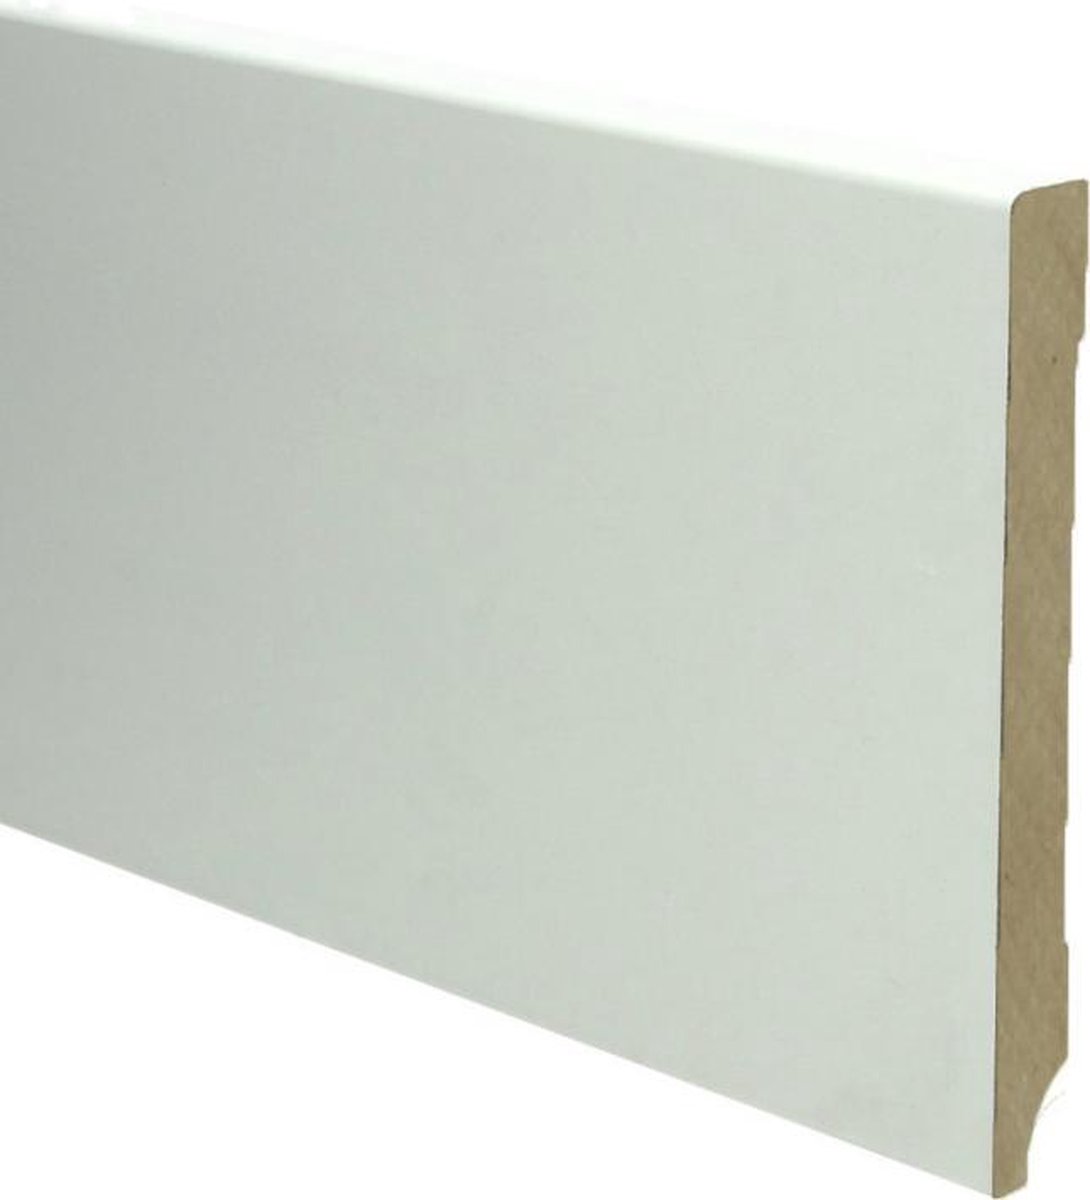 Hoge plinten - MDF - Moderne plint 150x15 mm - Wit - Voorgelakt - RAL 9010 - Per 5 stuks 2,4m